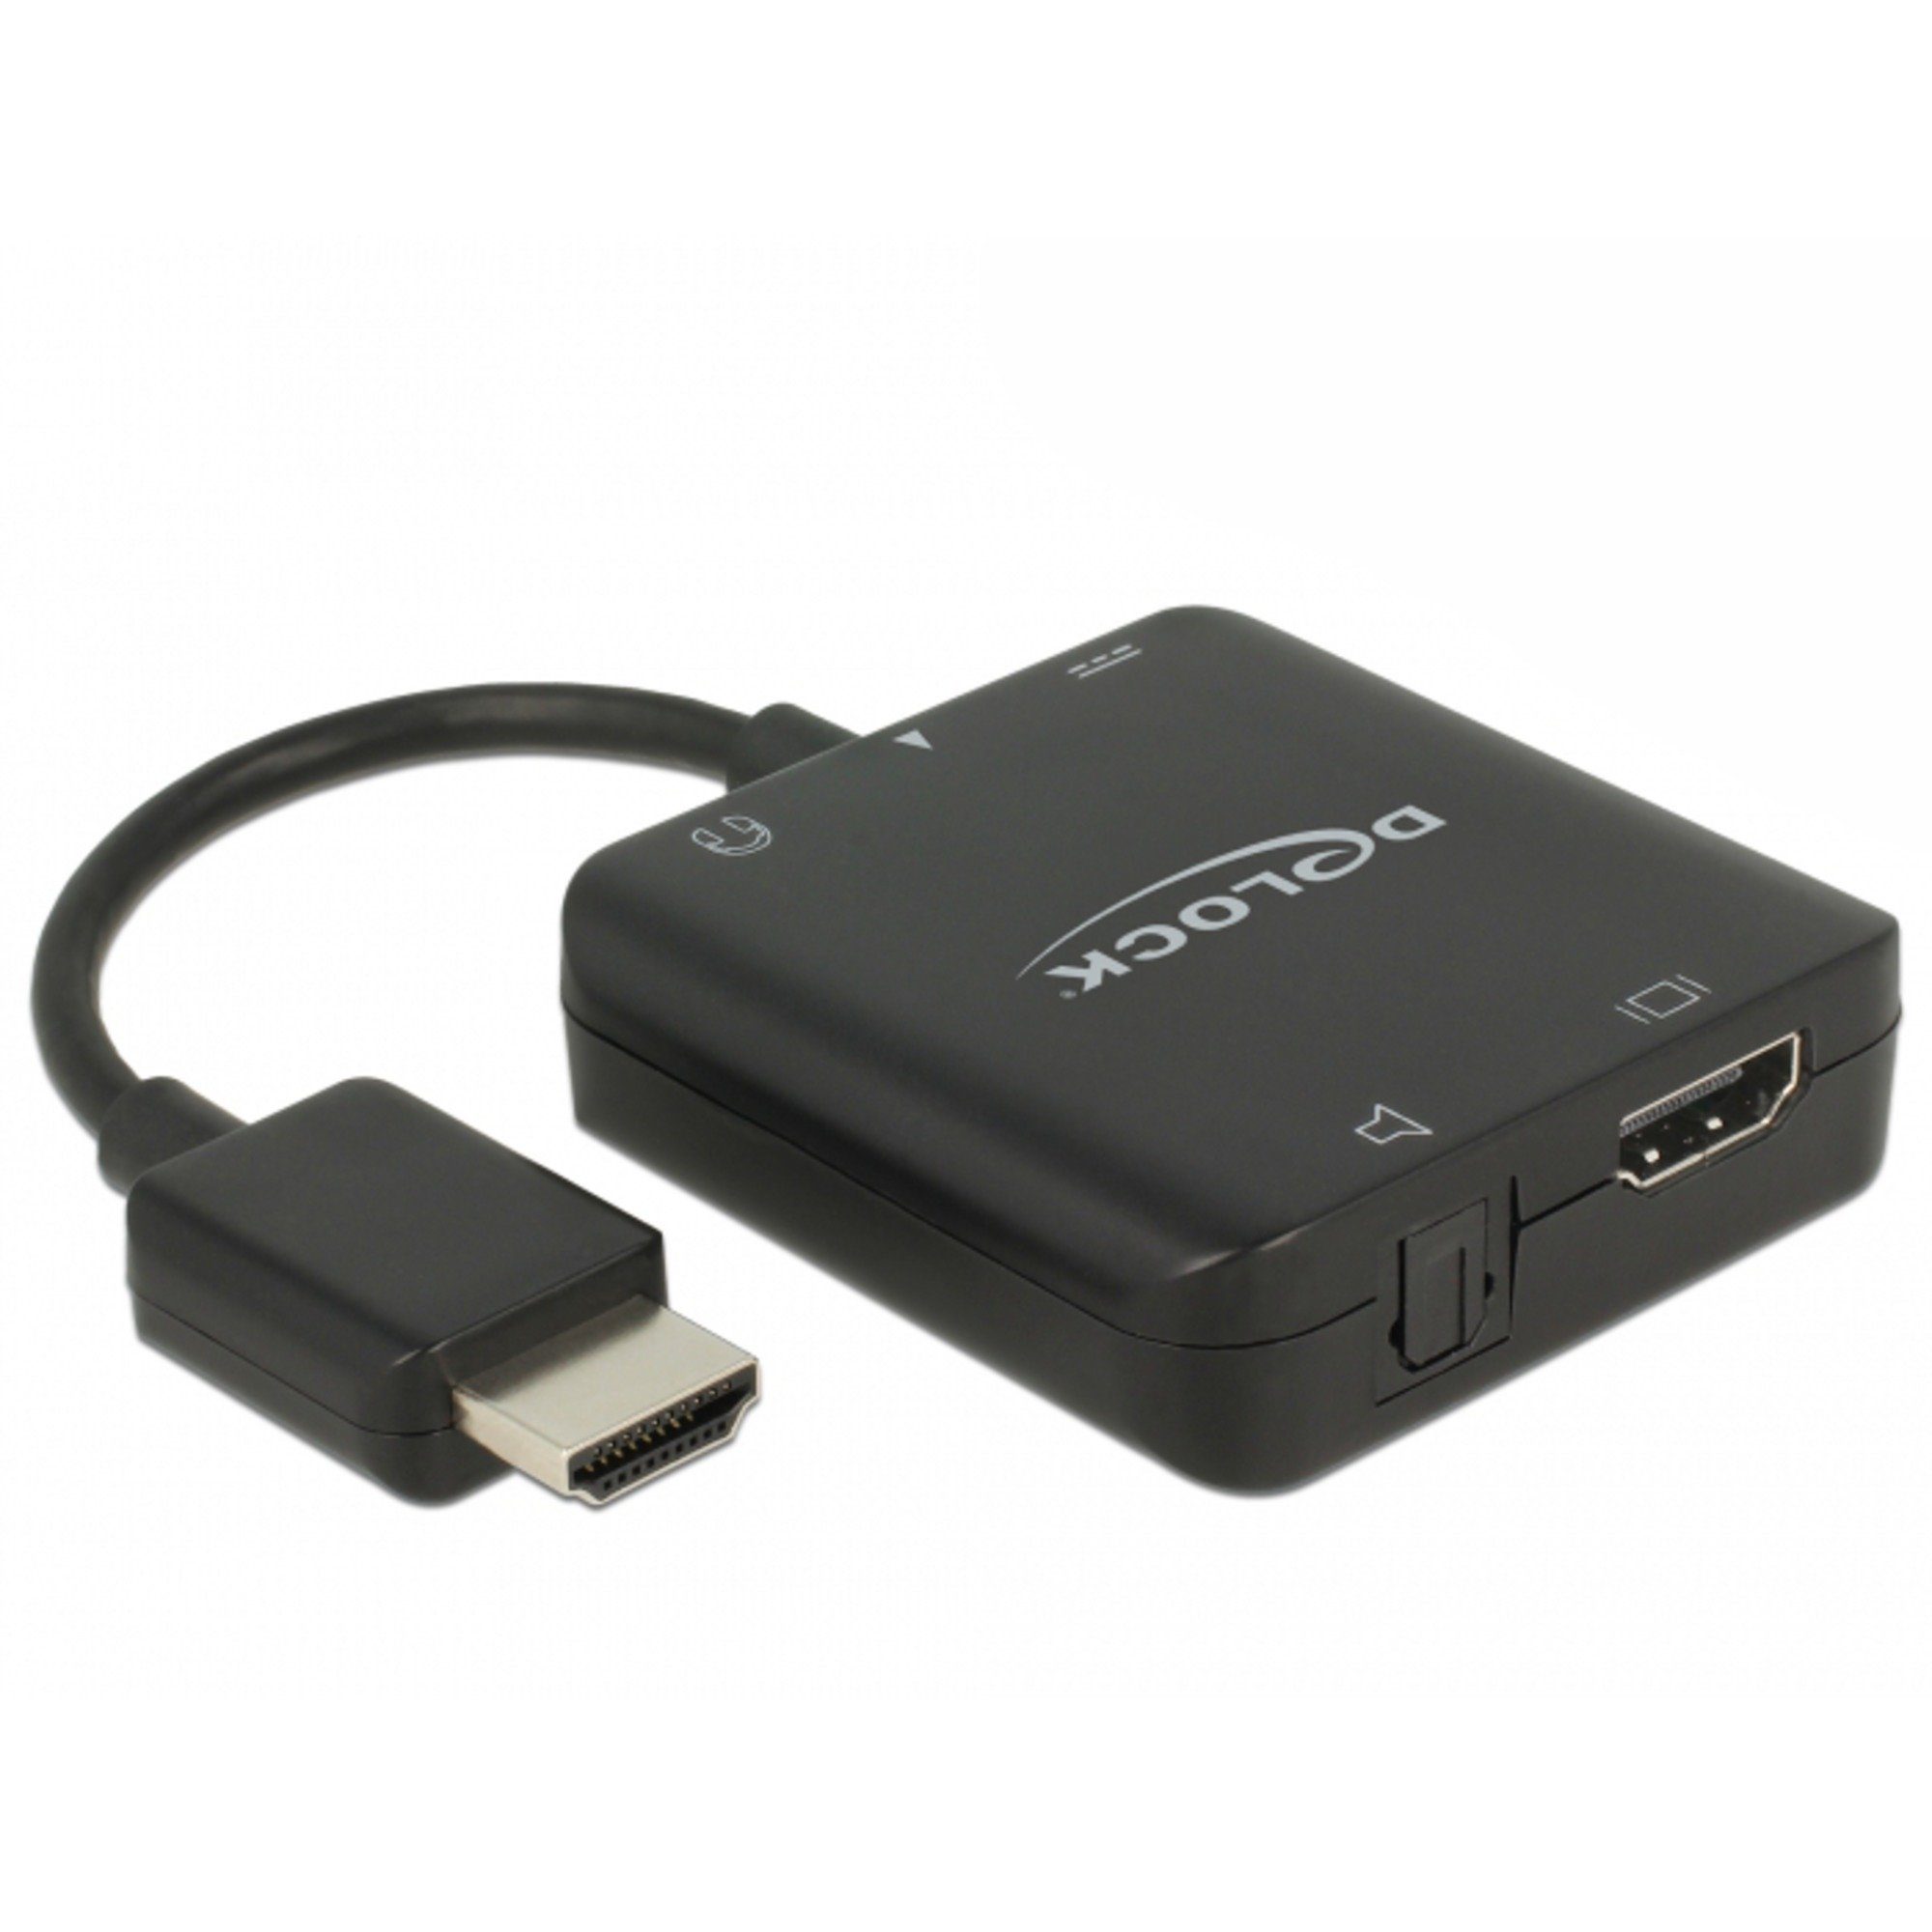 Delock DeLOCK HDMI + Stecker TOSLINK HDMI Adapter & Video-Adapter Audio- >